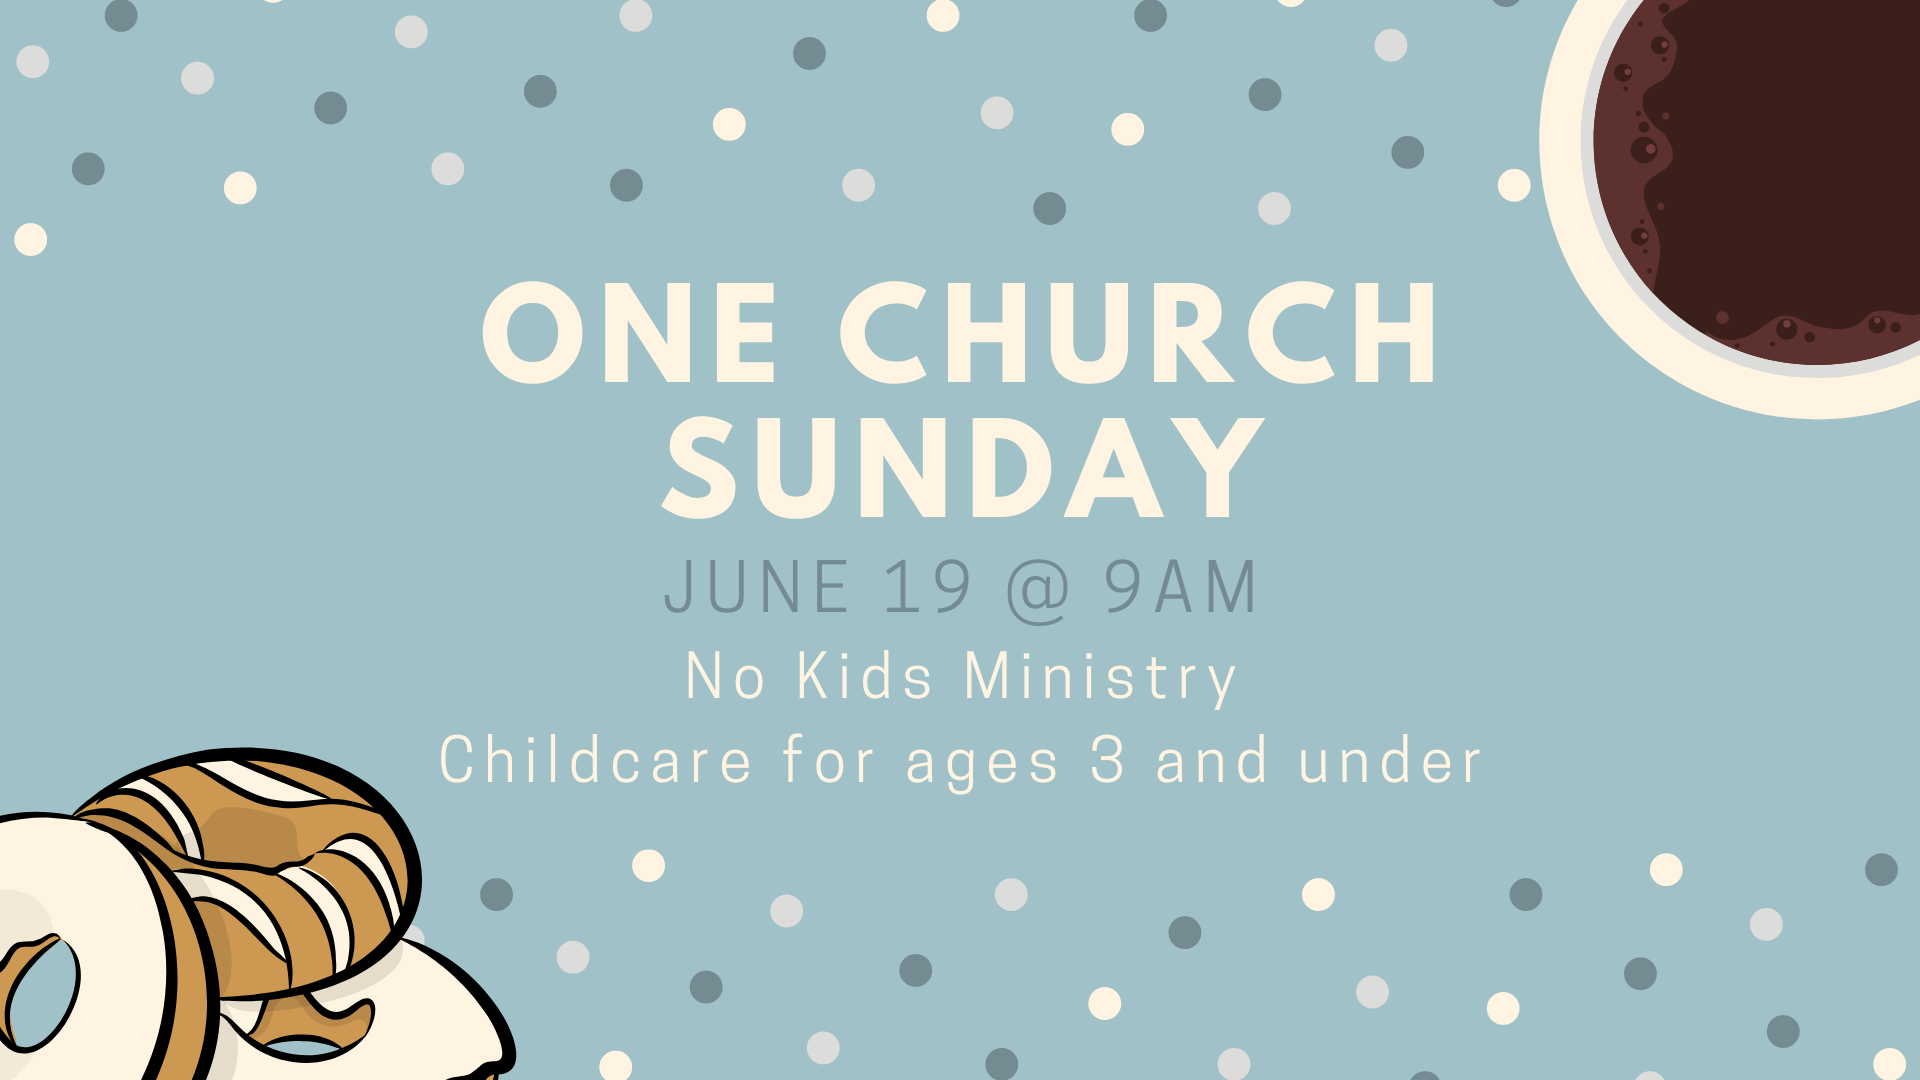 One Church Sunday